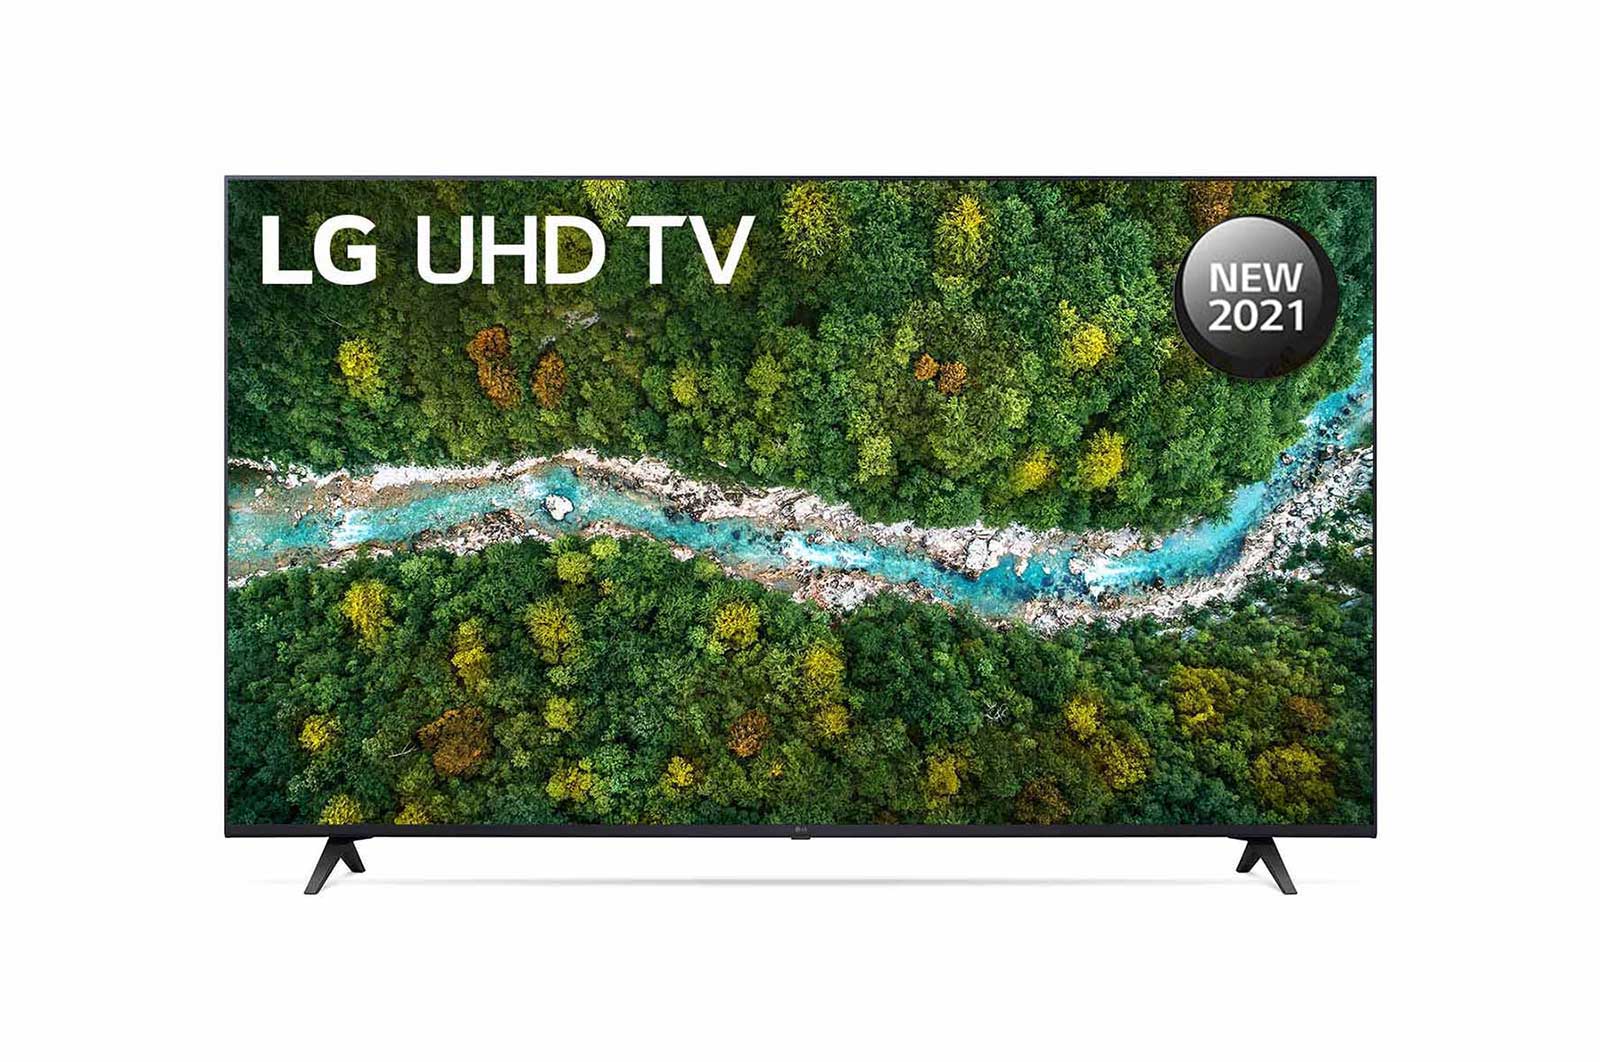 LG 165.1 cm (65 Inches) Smart Ultra HD 4K LED TV 65UP7740PTZ (2021 Model, Black) 3 Year Warranty